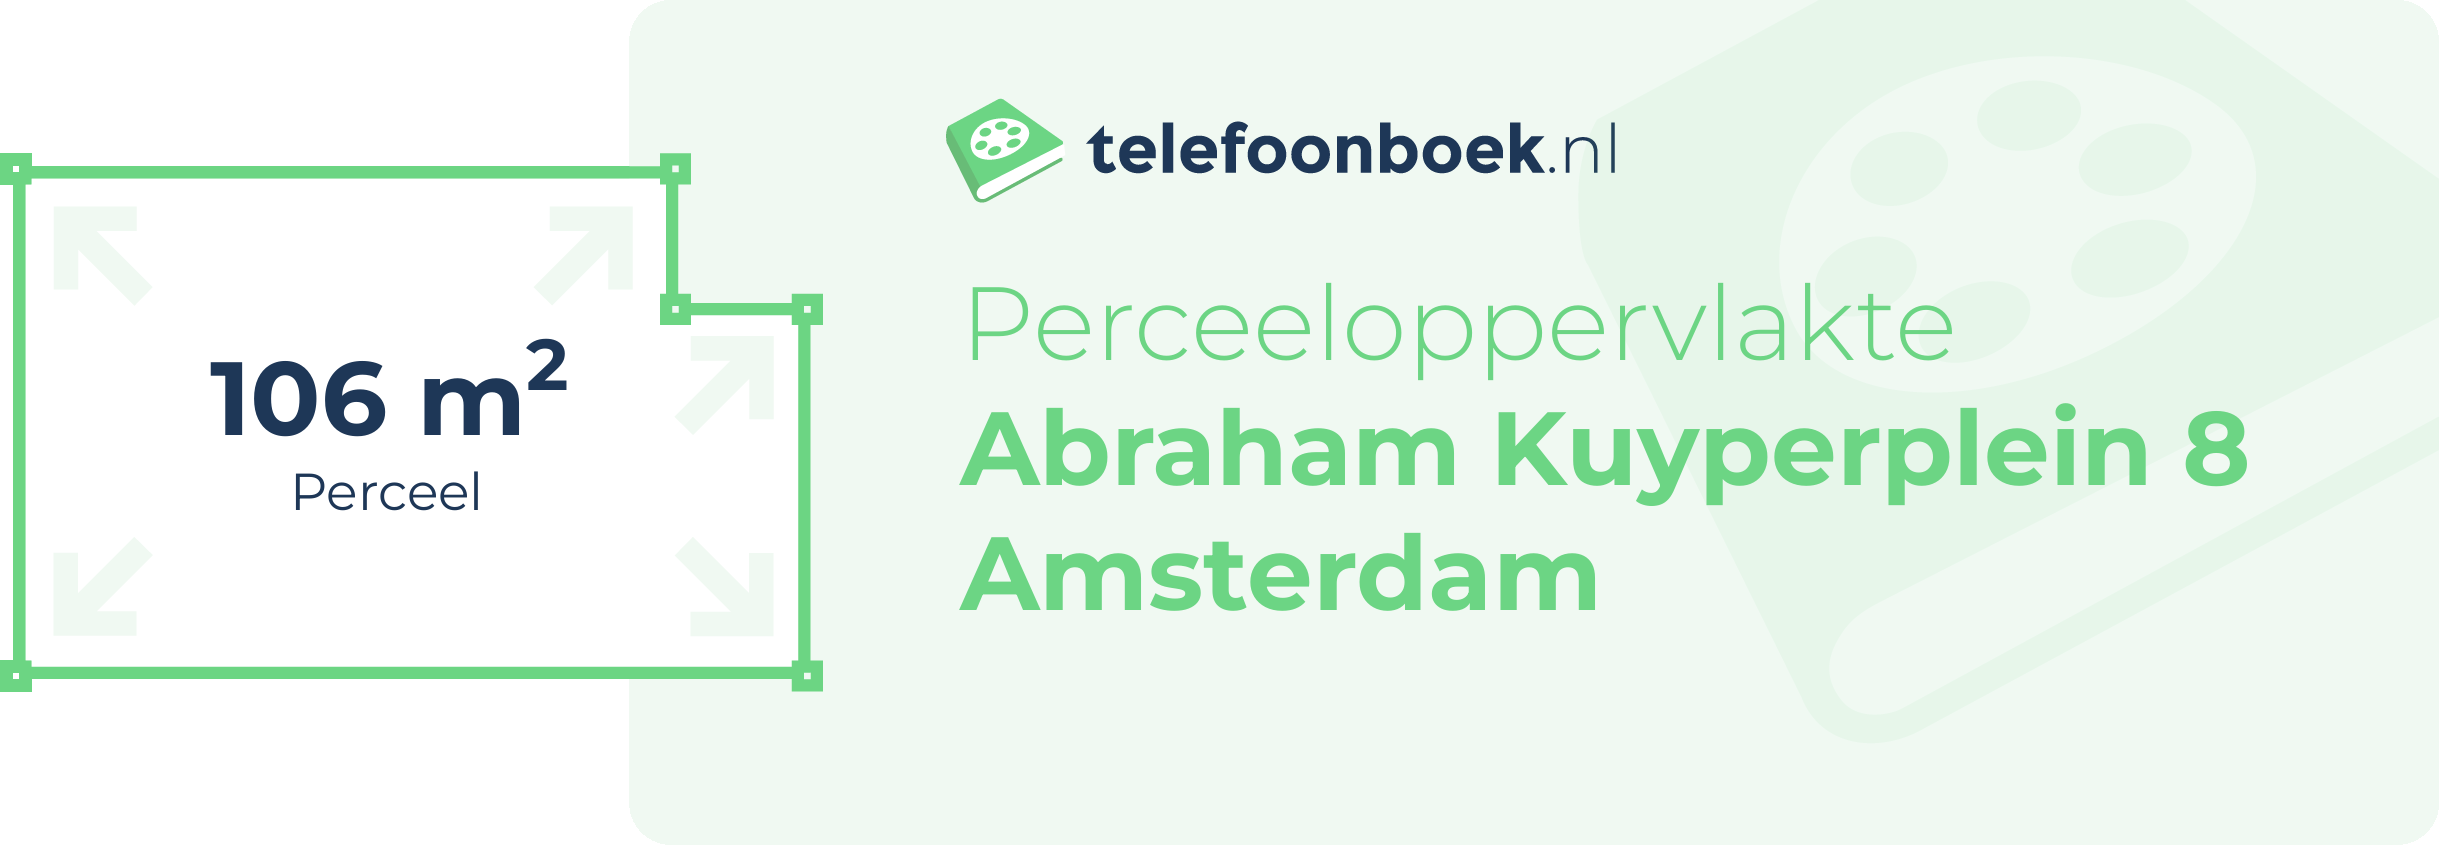 Perceeloppervlakte Abraham Kuyperplein 8 Amsterdam